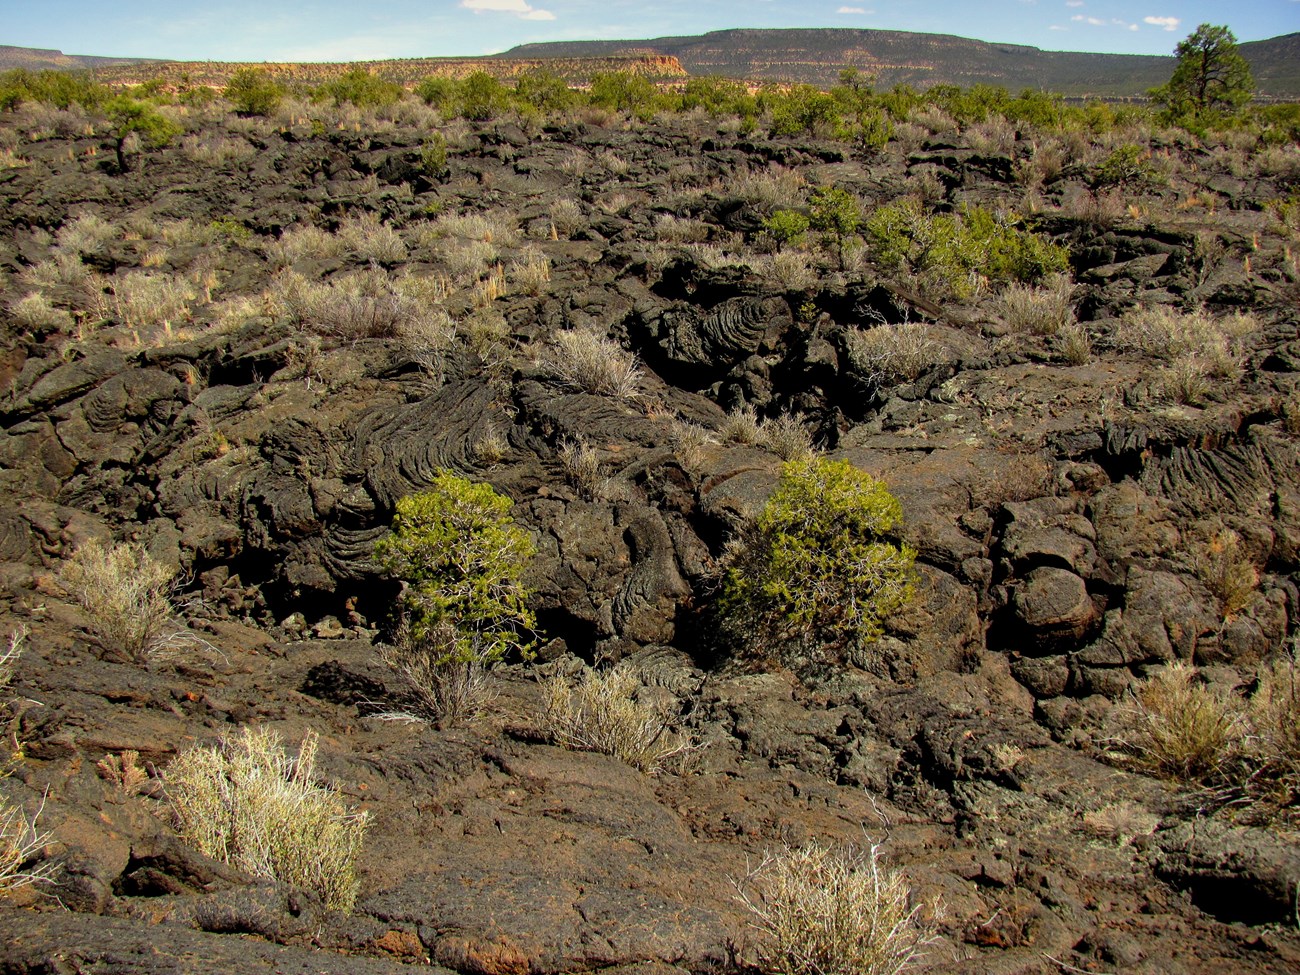 Photo of a volcanic landscape with arid region vegetation